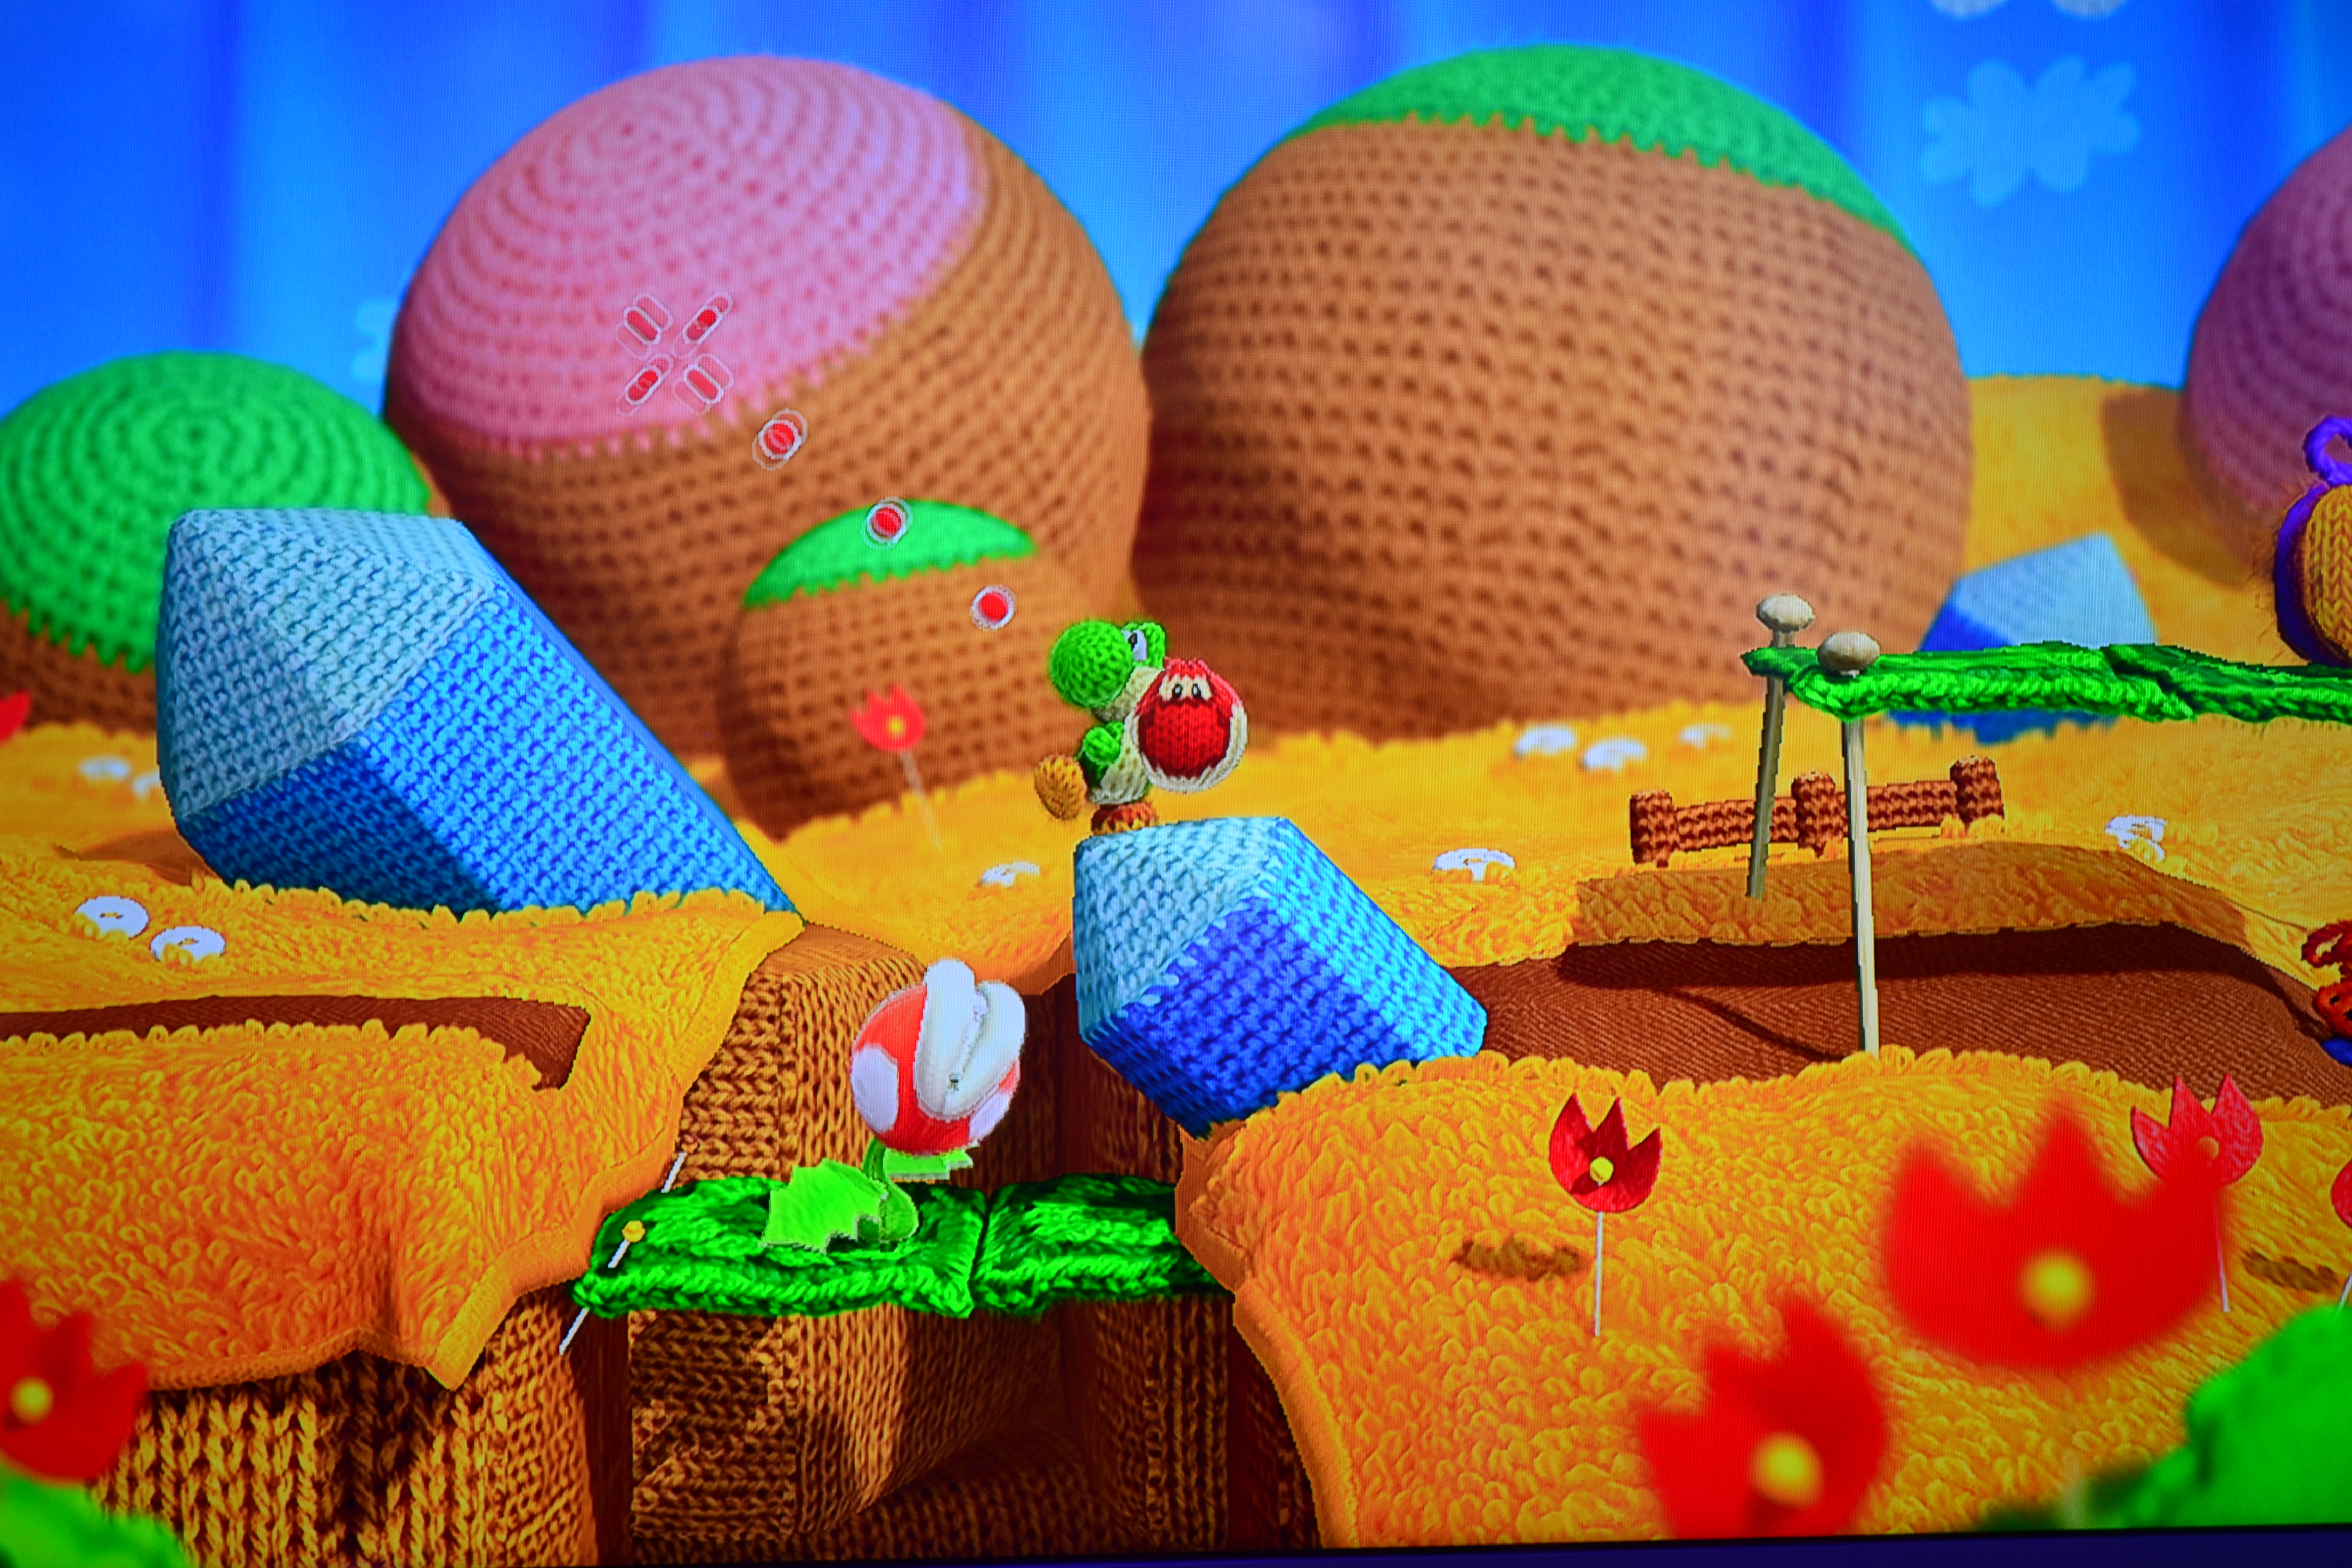 671336 descargar imagen videojuego, yoshi's woolly world: fondos de pantalla y protectores de pantalla gratis